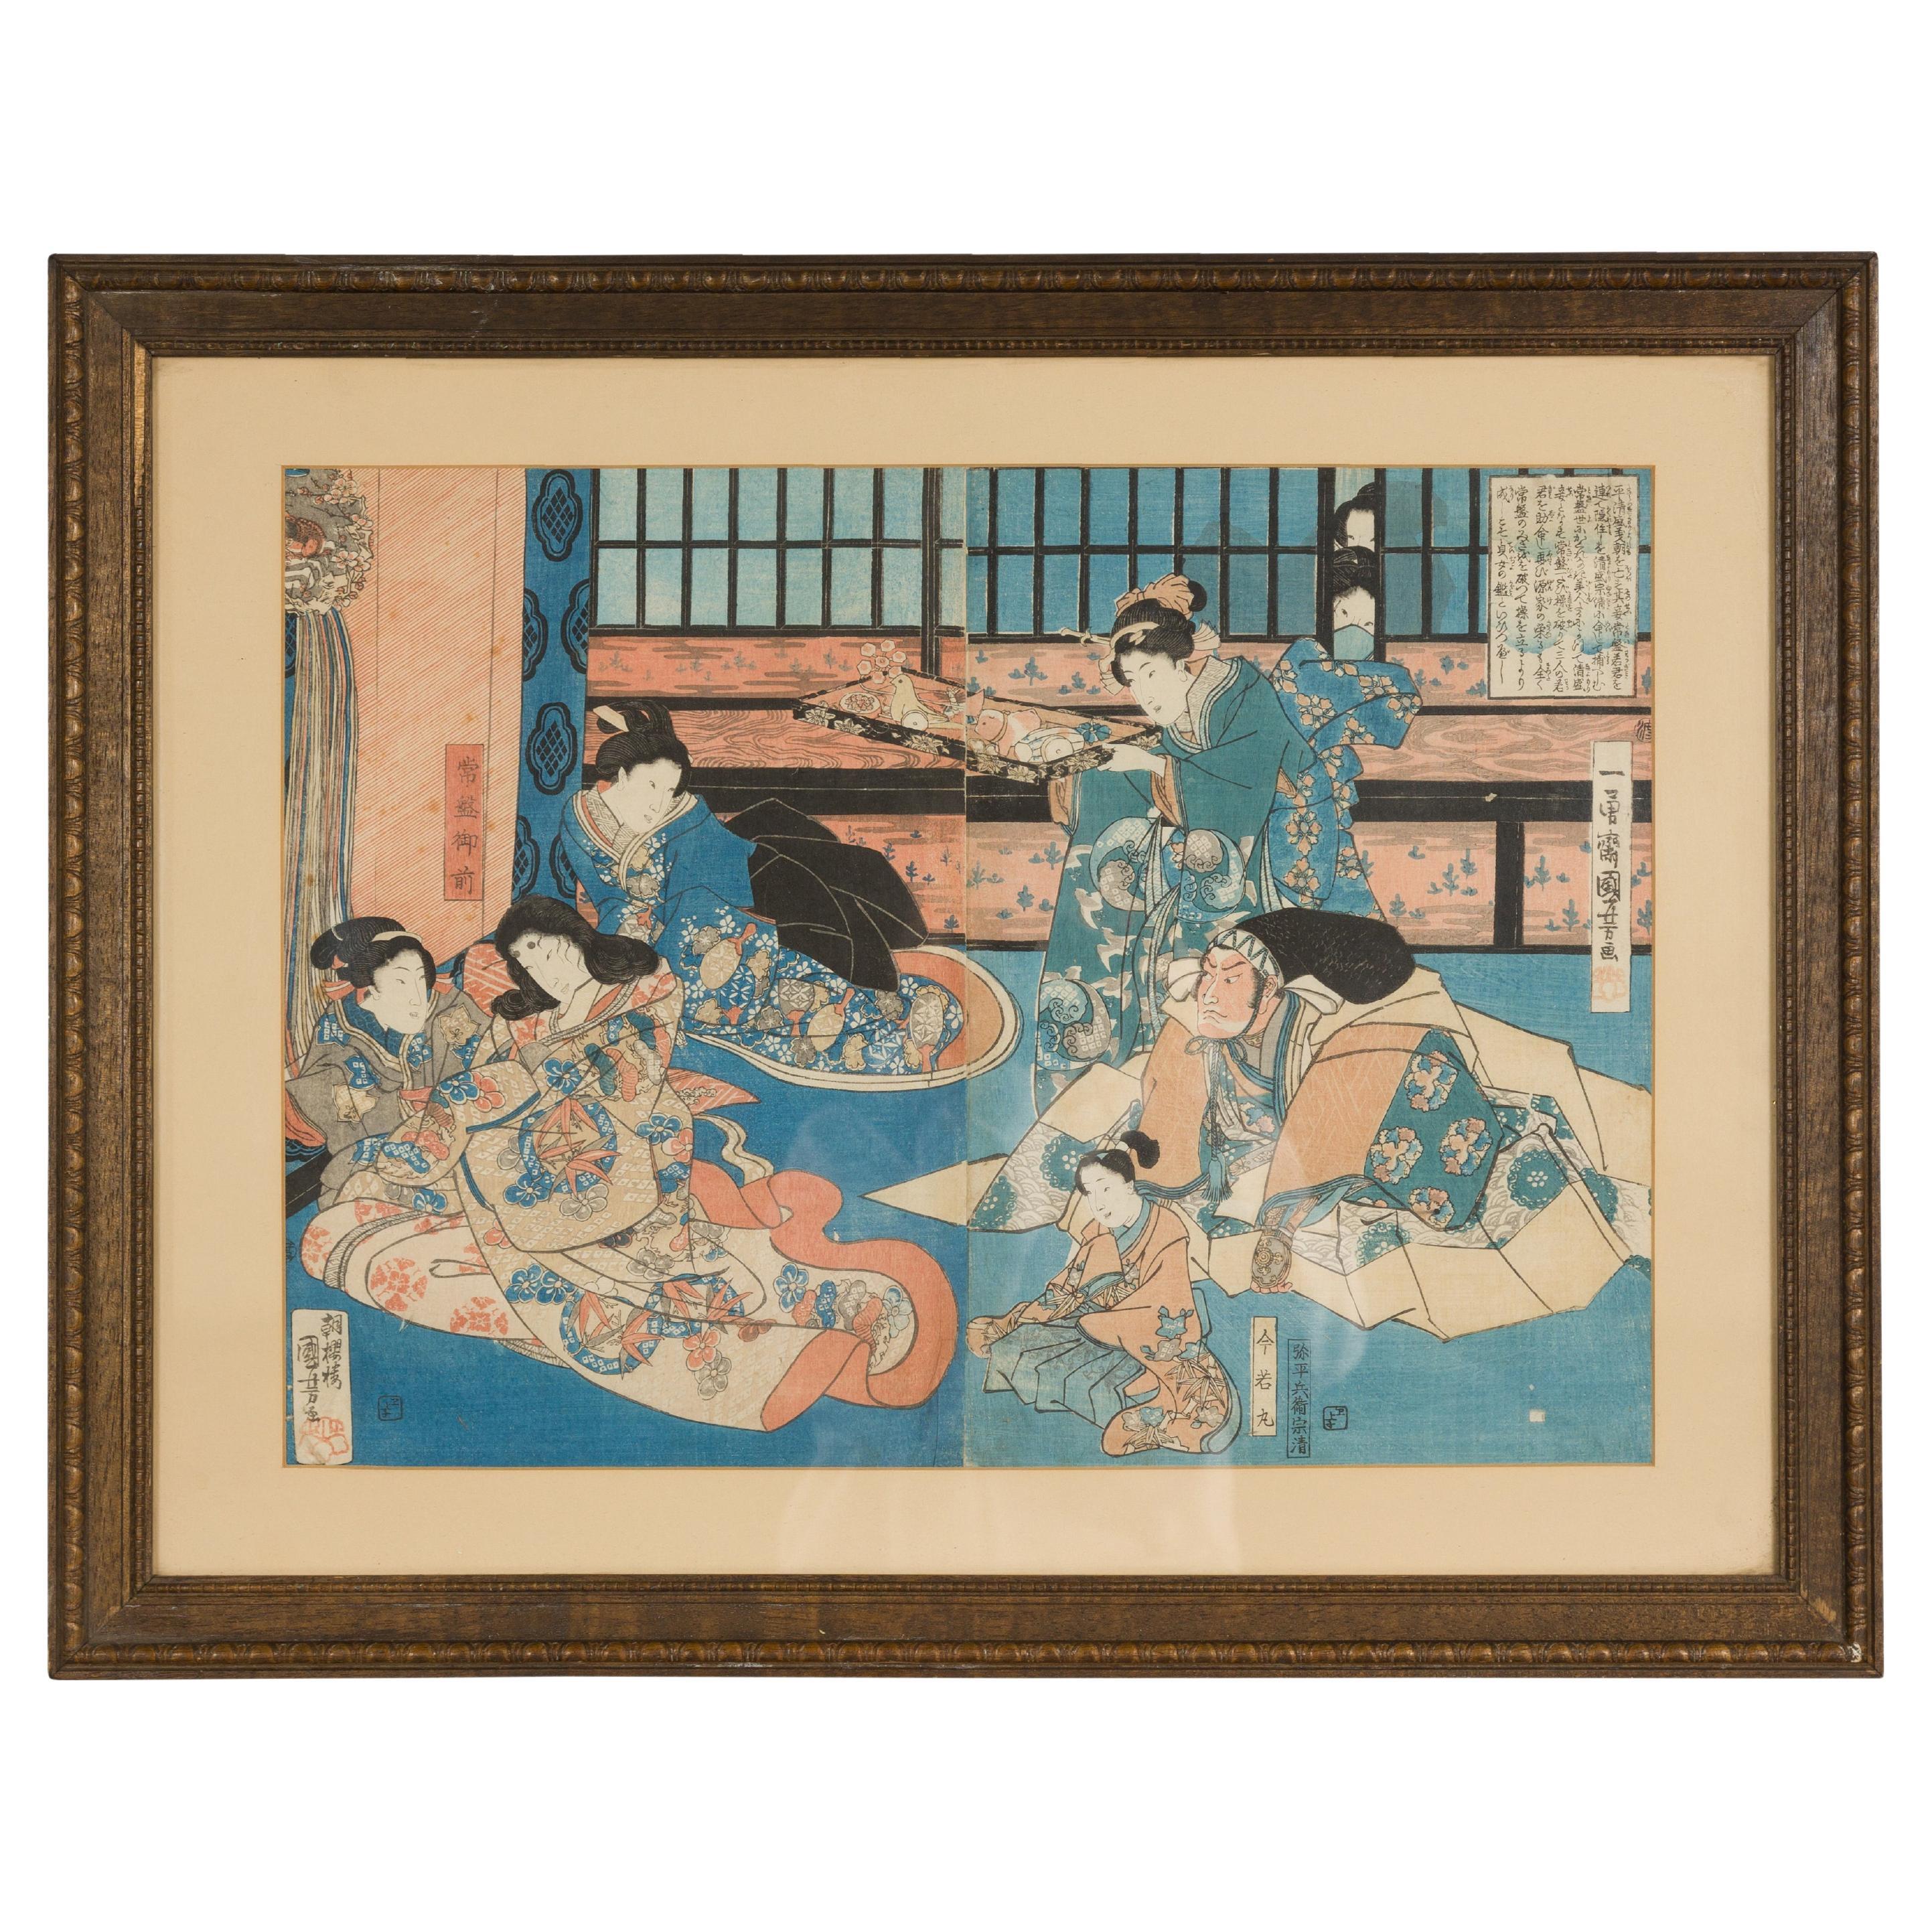 Diptyque en bois japonais Edo du 19ème siècle signé Utagawa Kuniyoshi